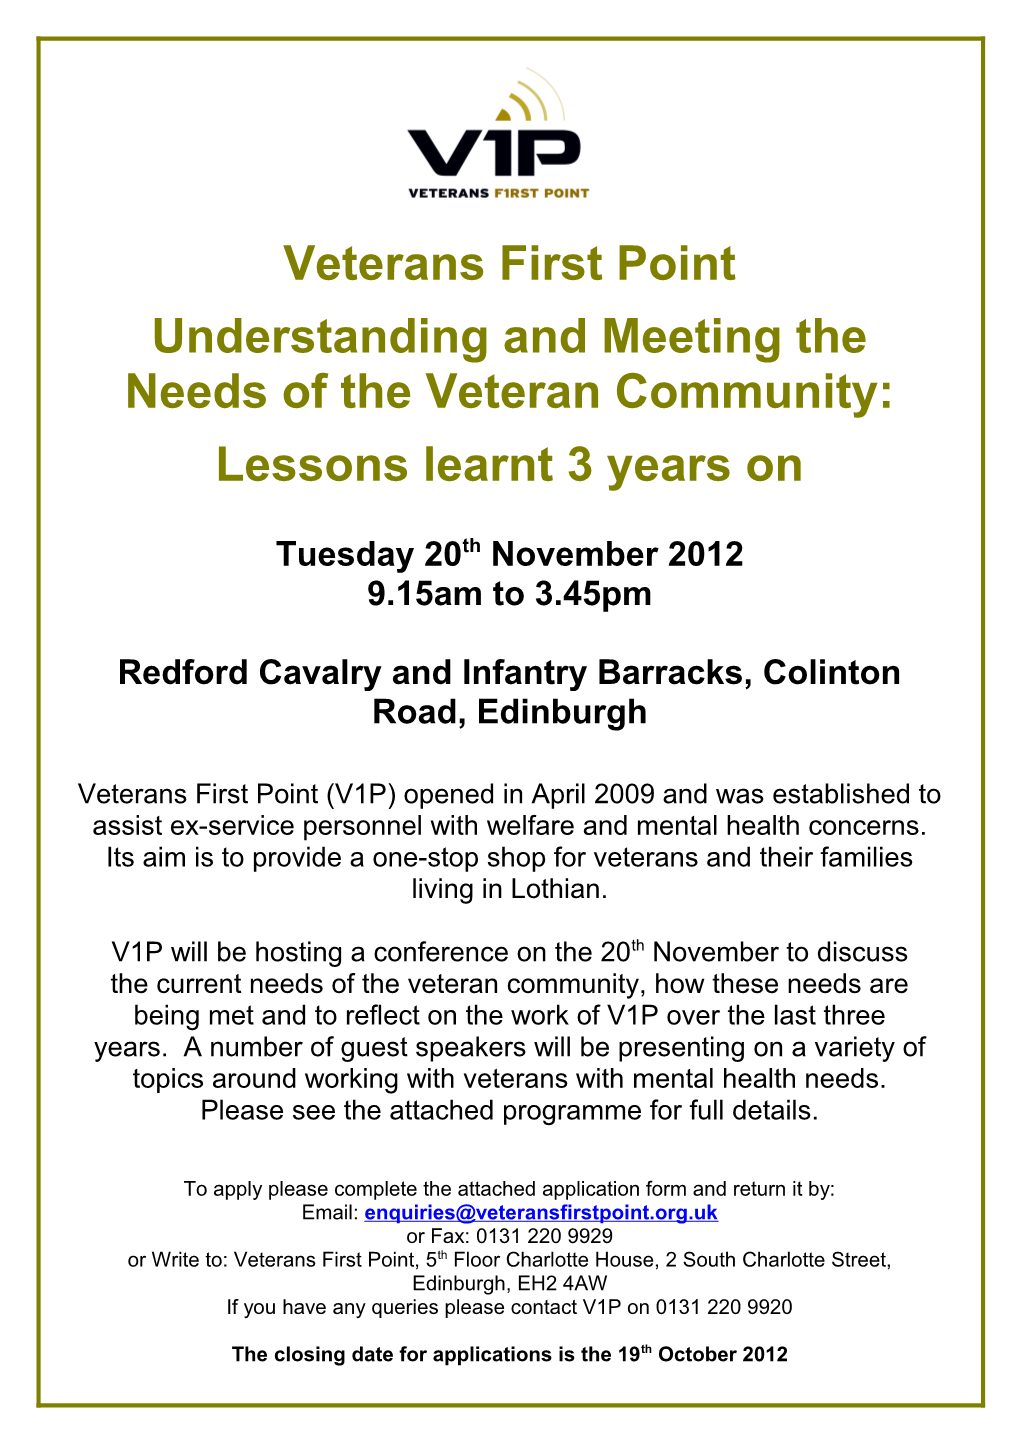 Understanding and Meeting the Needs of the Veteran Community